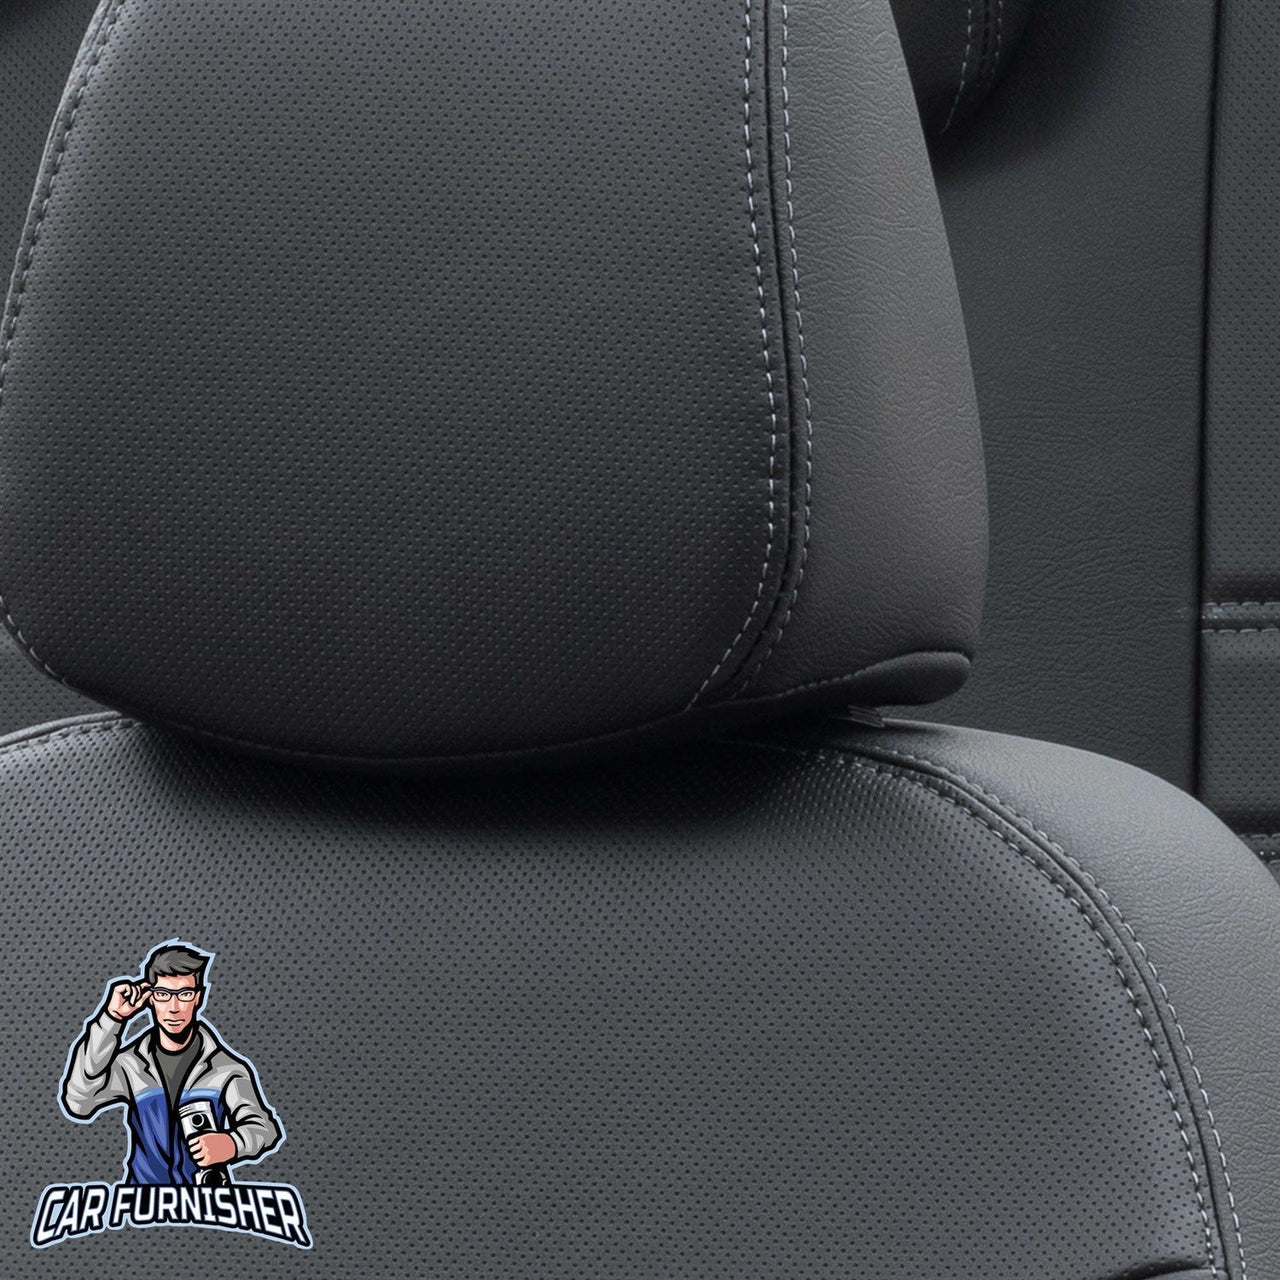 Dodge Nitro Seat Cover Istanbul Leather Design Black Leather